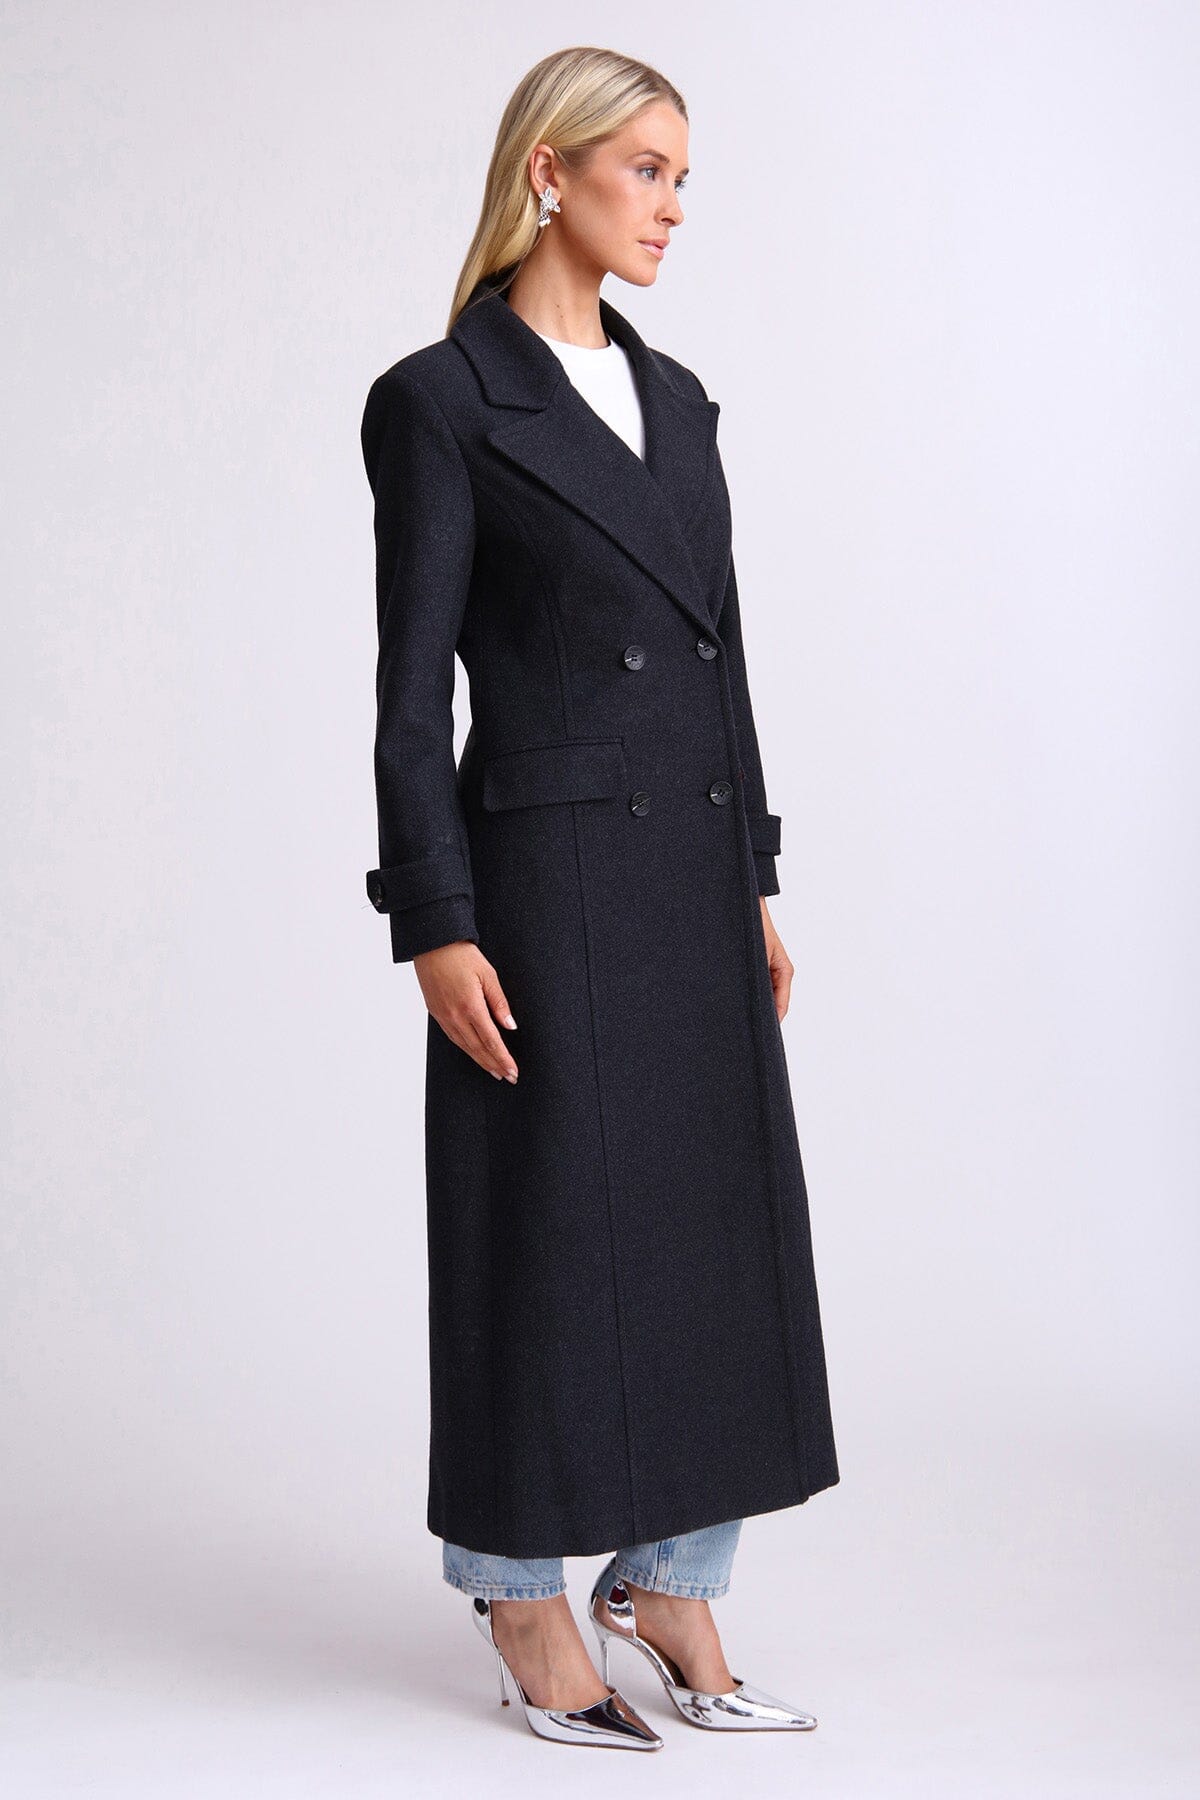 Black strong shoulder tailored wool blend long coat - women's figure flattering date night coats outerwear for fall winter fashion